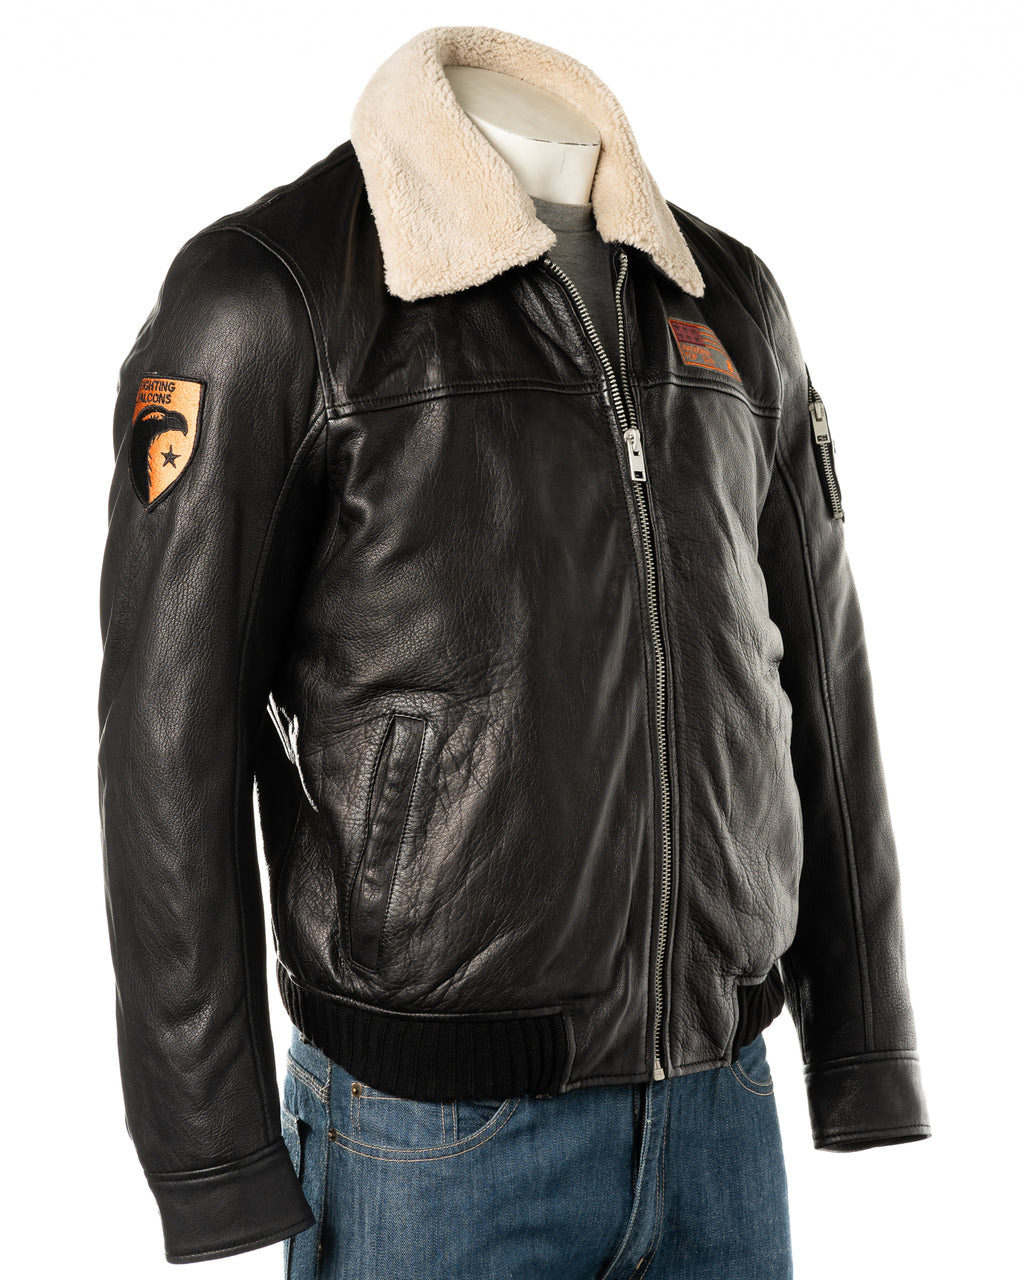 Men's Black Aviator Pilot A2 Style Cow Hide Jacket with Detachable Faux Sheepskin Collar: Giosu